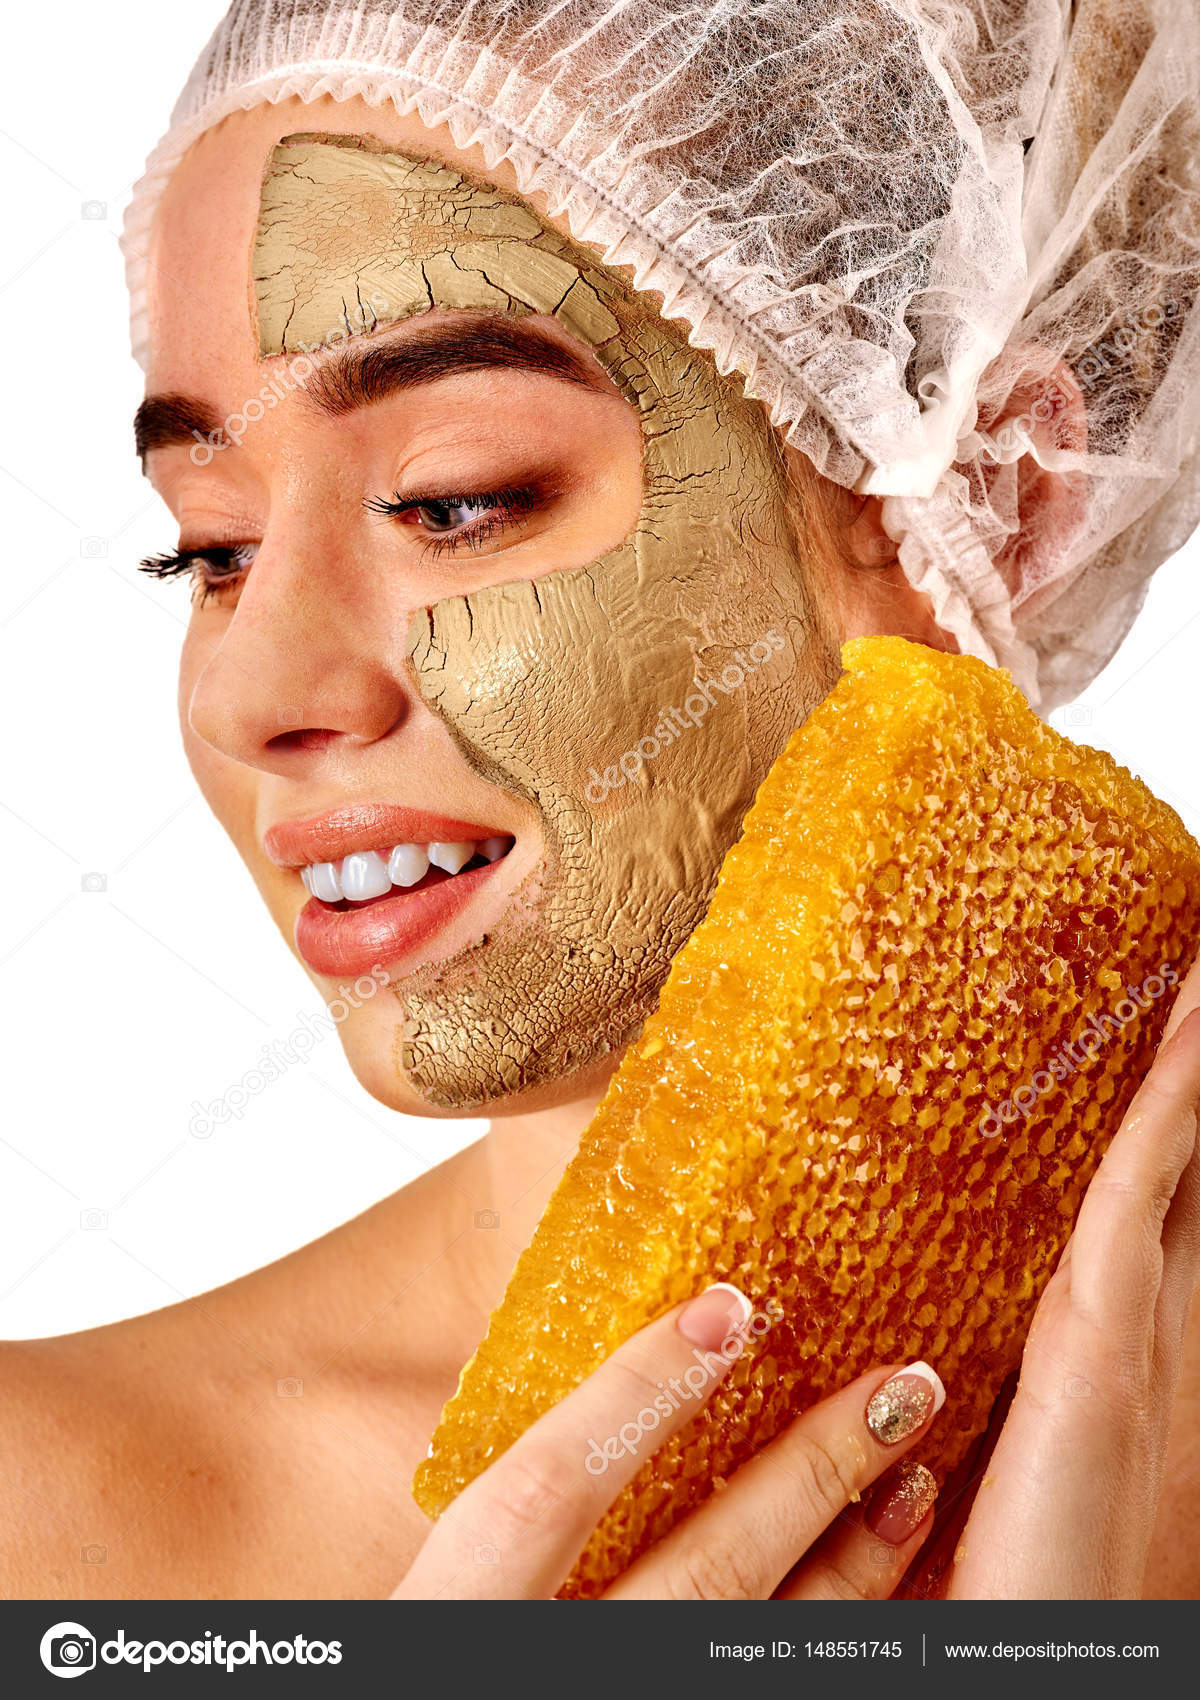 Download Honey Mask Stock Photos Royalty Free Honey Mask Images Depositphotos PSD Mockup Templates